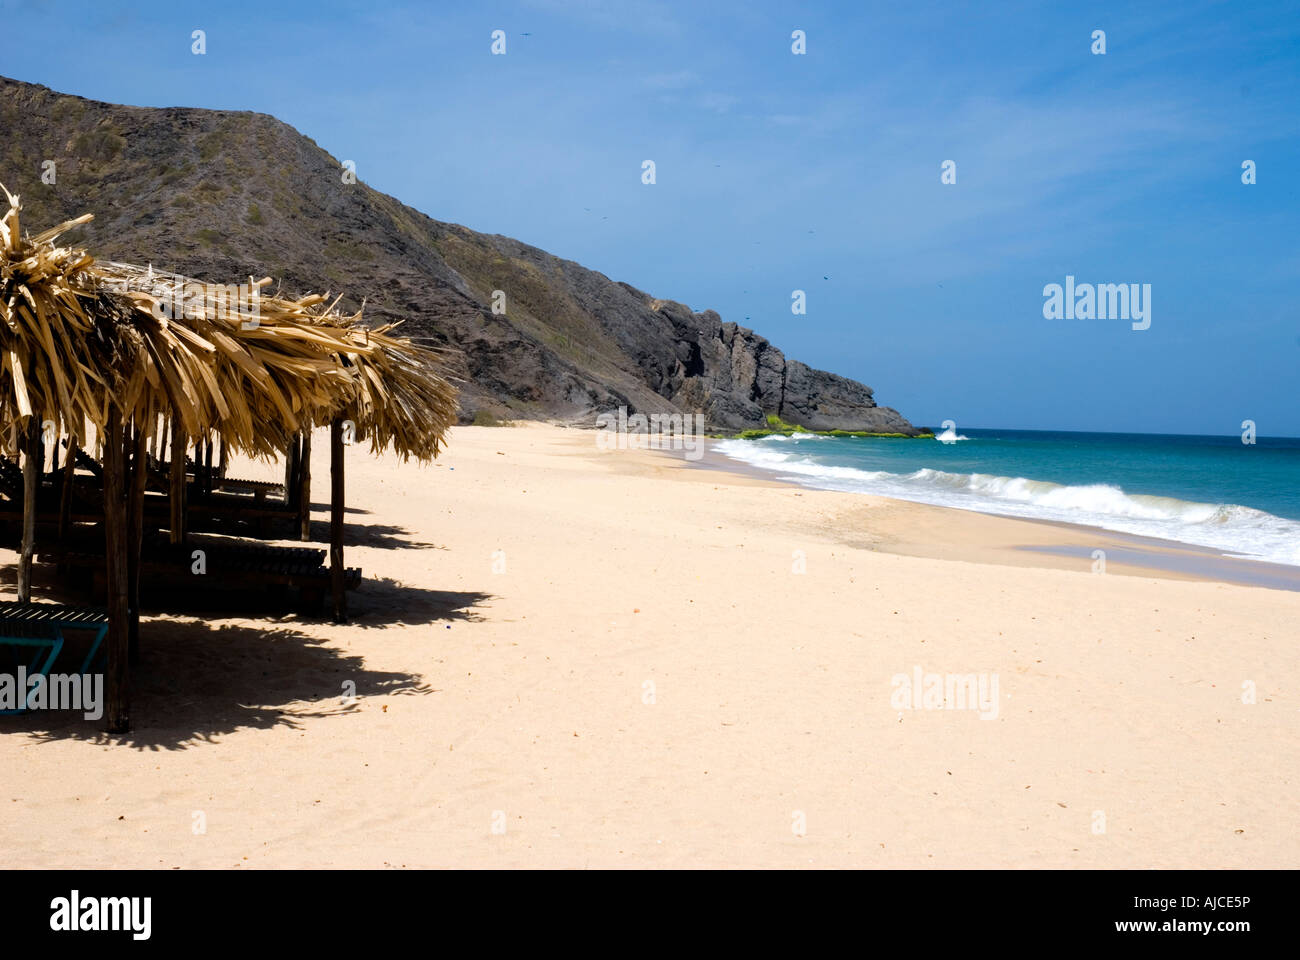 Playa playa Caribe Isla Margarita Venezuela Fotografía stock - Alamy